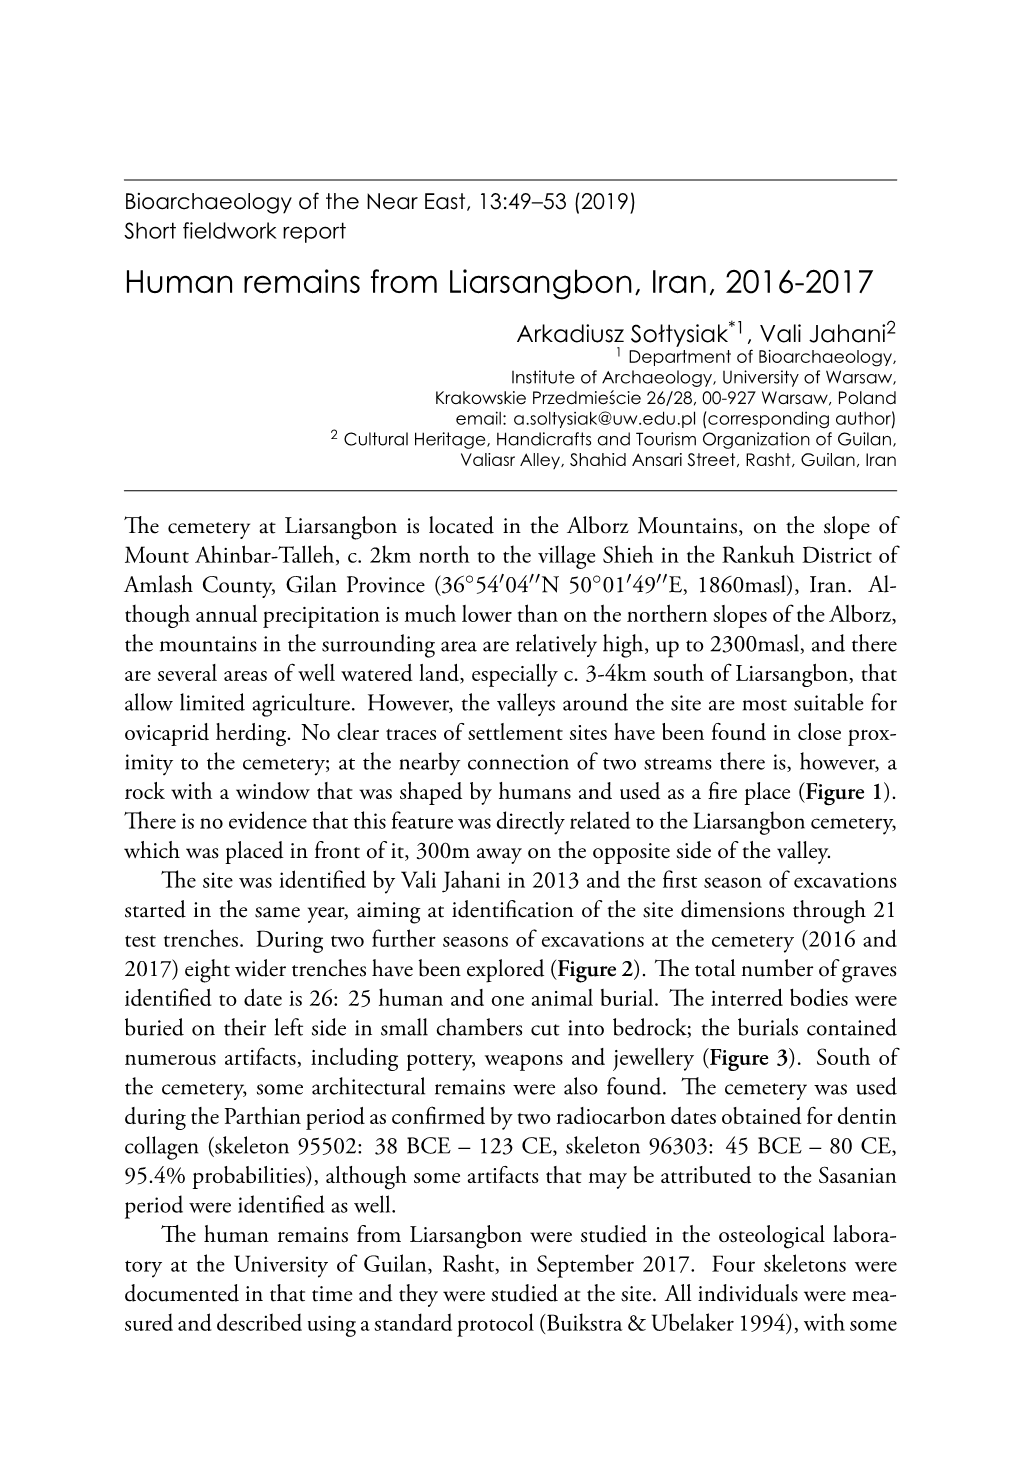 Short Fieldwork Report. Human Remains from Liarsangbon, Iran, 2016-2017